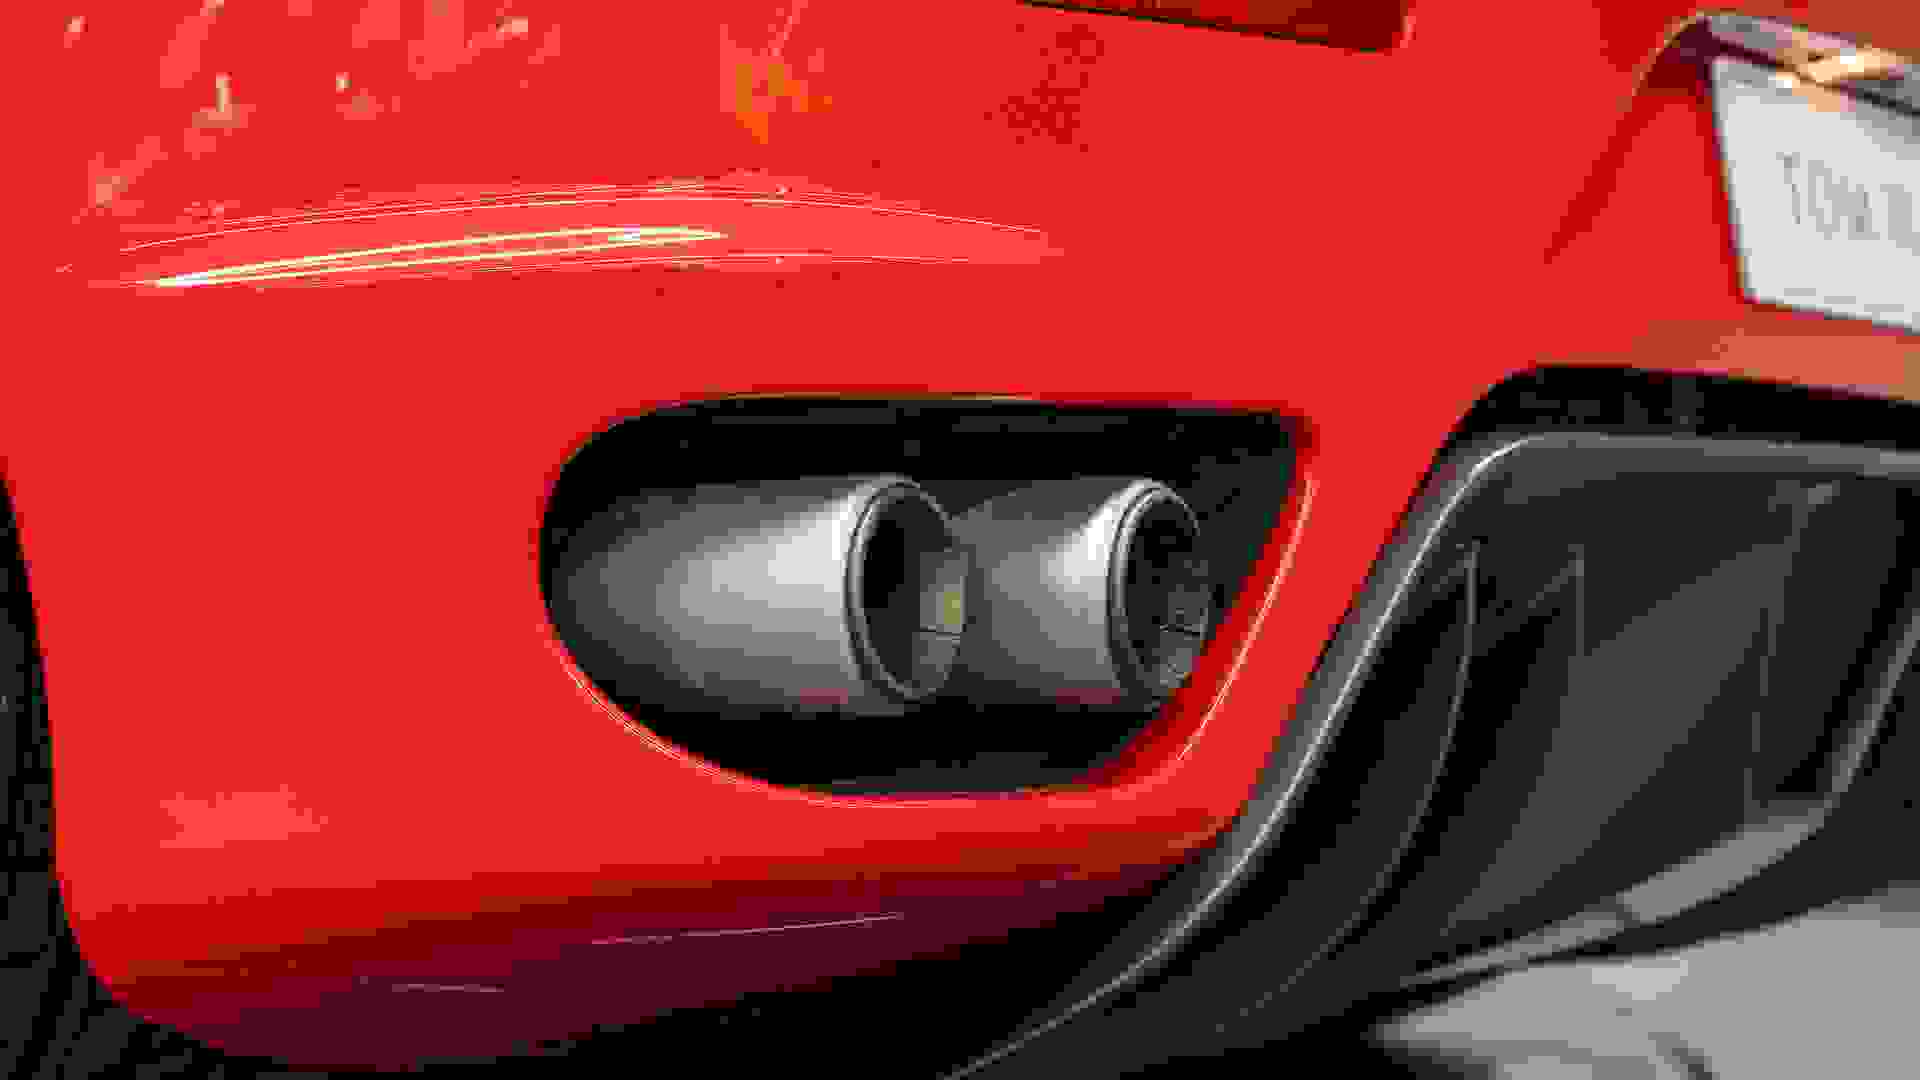 Ferrari F430 Photo ca6caf9a-5369-4af5-b830-6efe5f0e6fcc.jpg